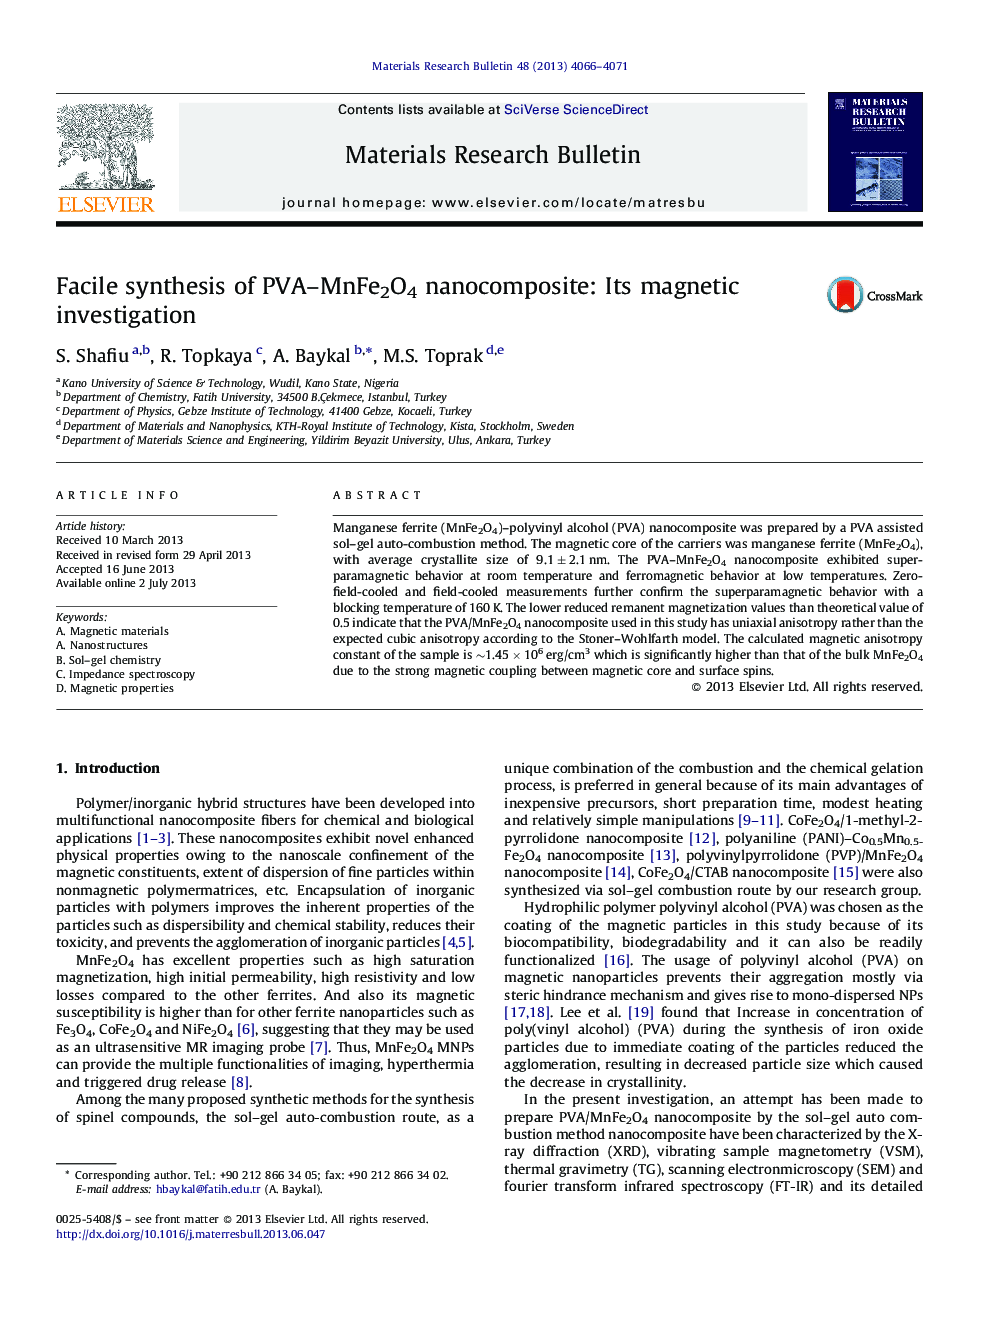 Facile synthesis of PVA-MnFe2O4 nanocomposite: Its magnetic investigation